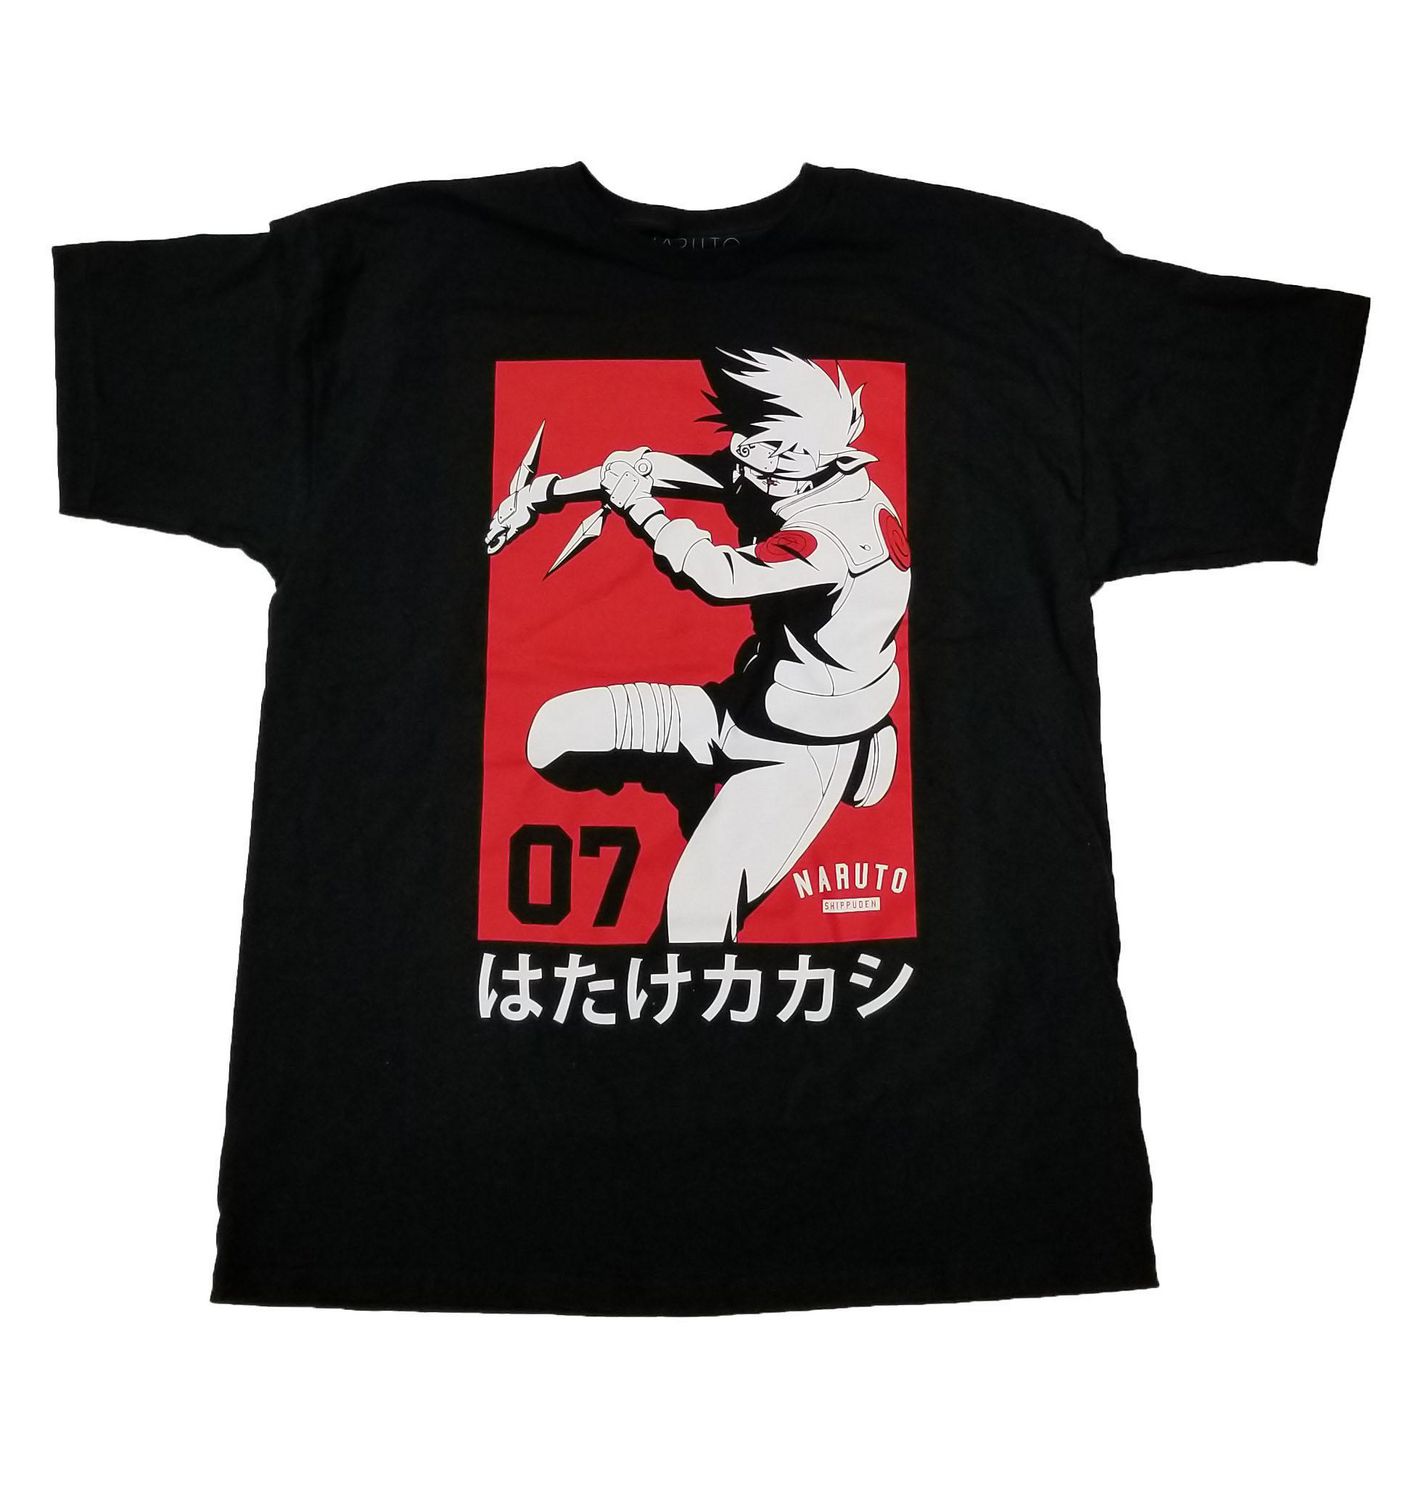 Naruto T-Shirt (Black) | Walmart Canada